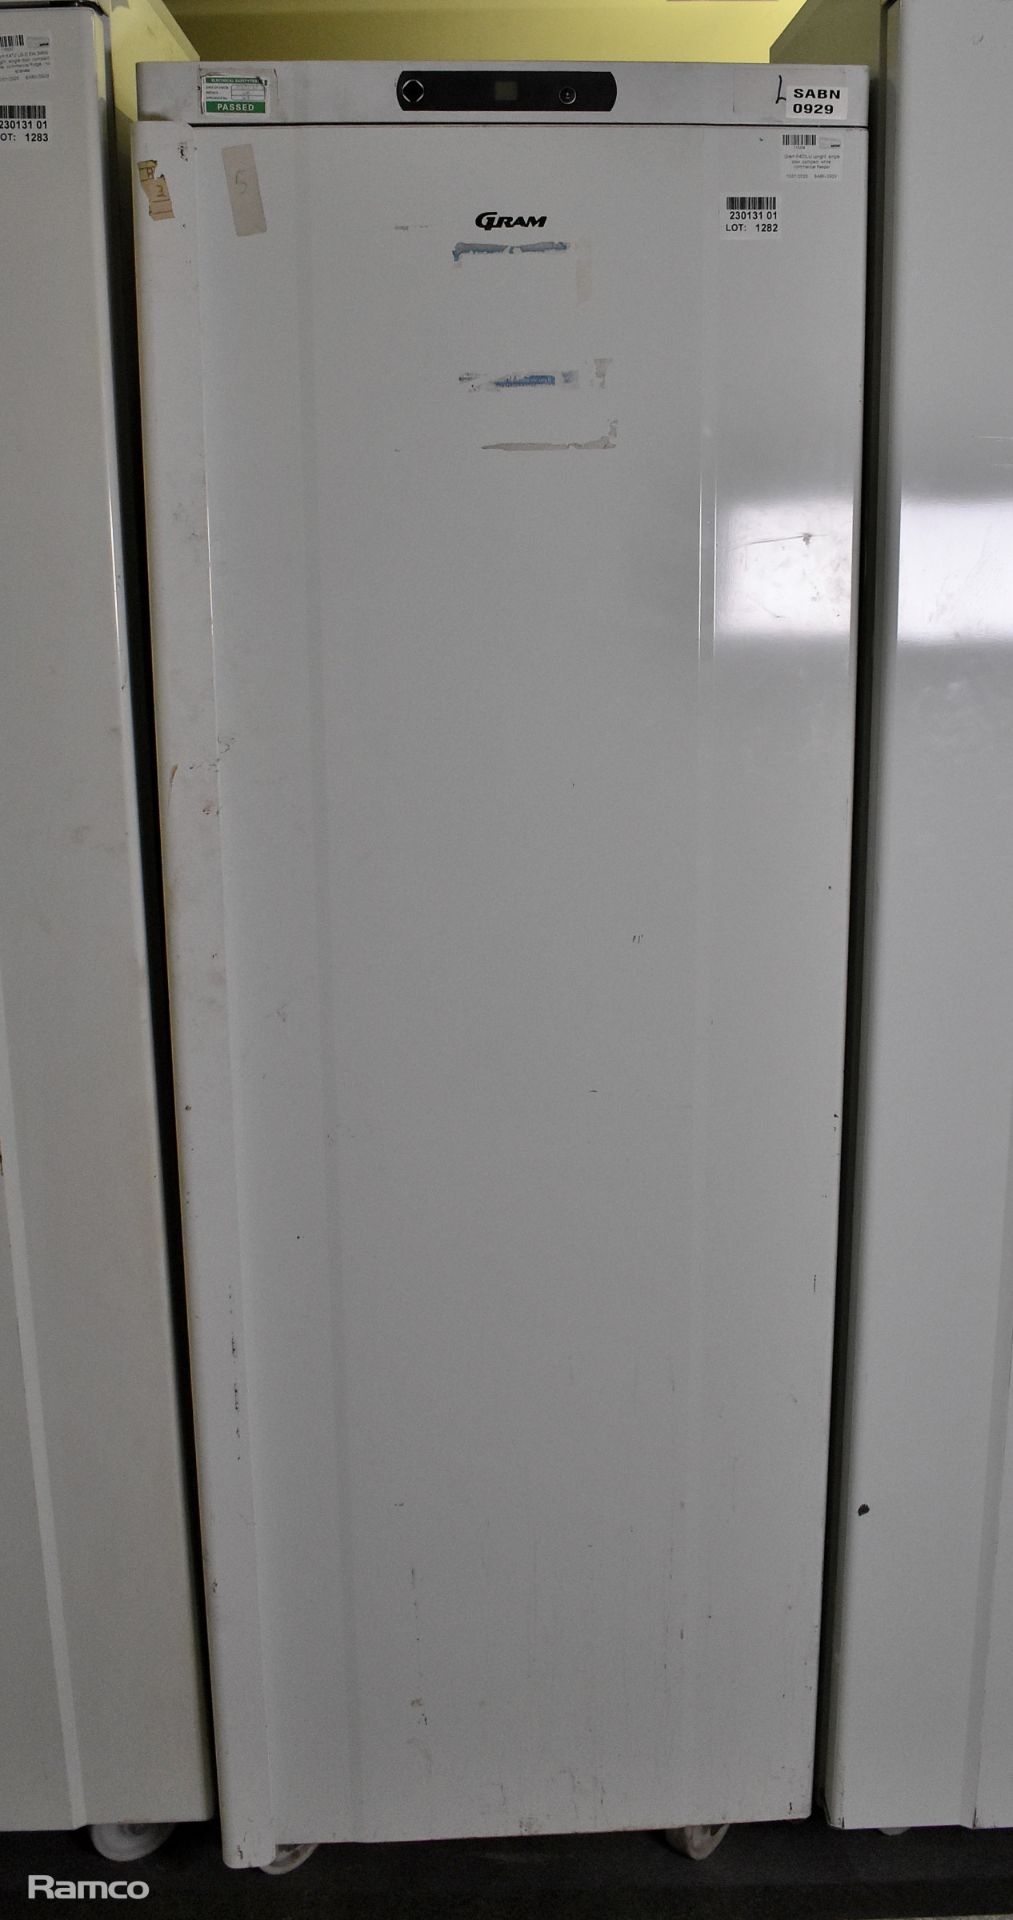 Gram F400LU upright, single door white commercial freezer